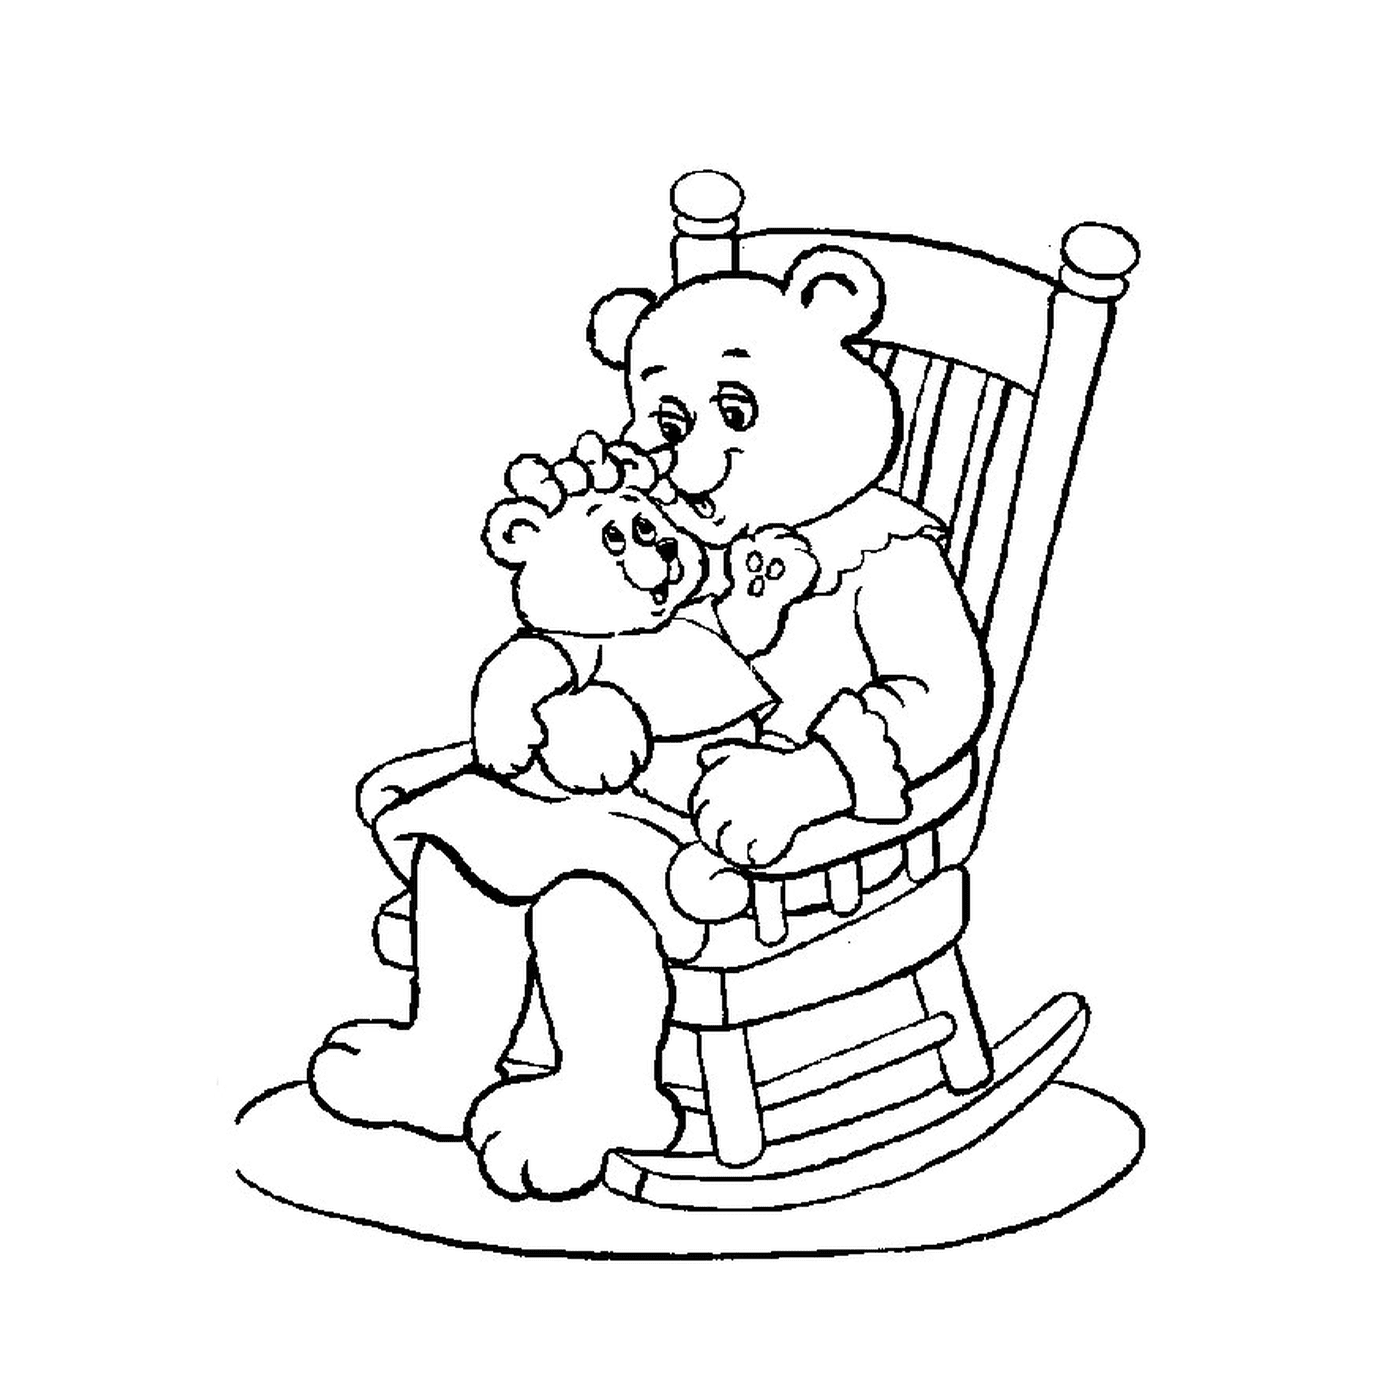  Orso seduto su una sedia a dondolo che tiene un orso 